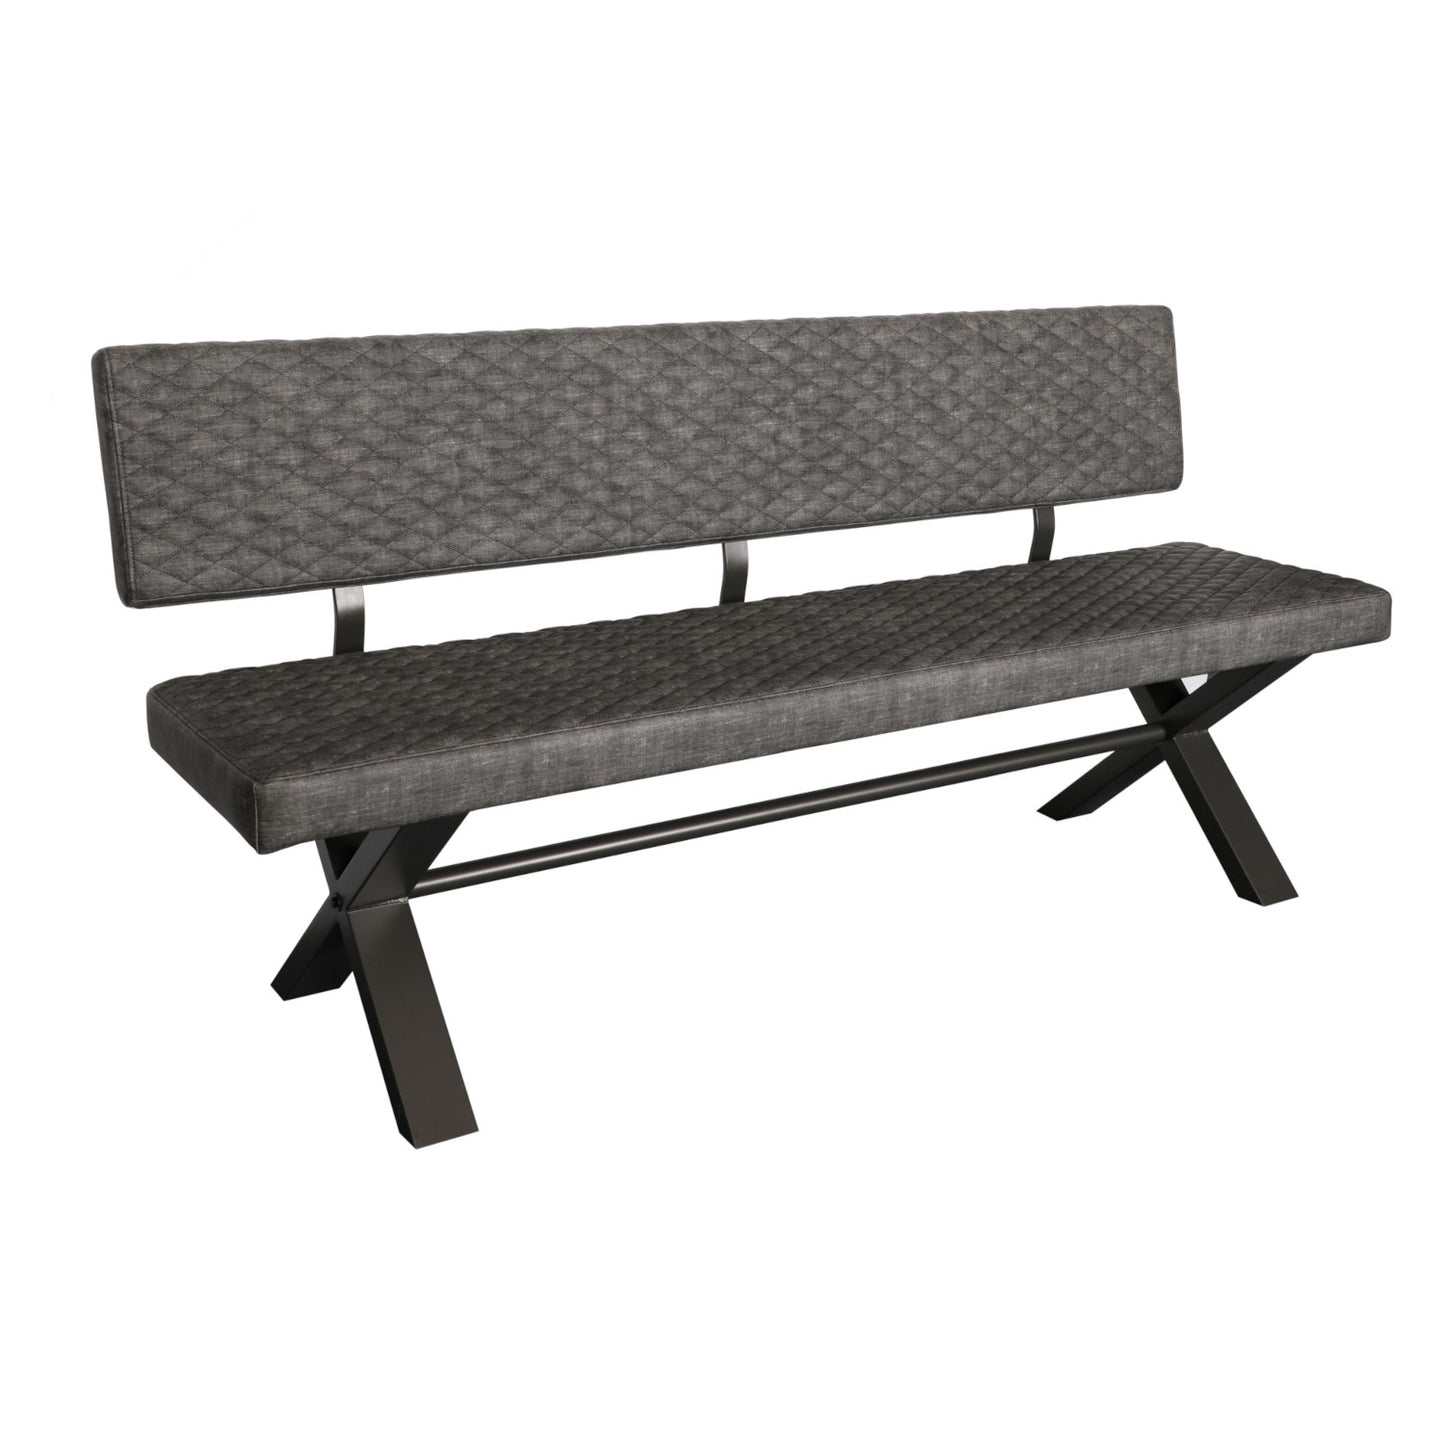 Elsworthy Bench - Large Upholstered With Back